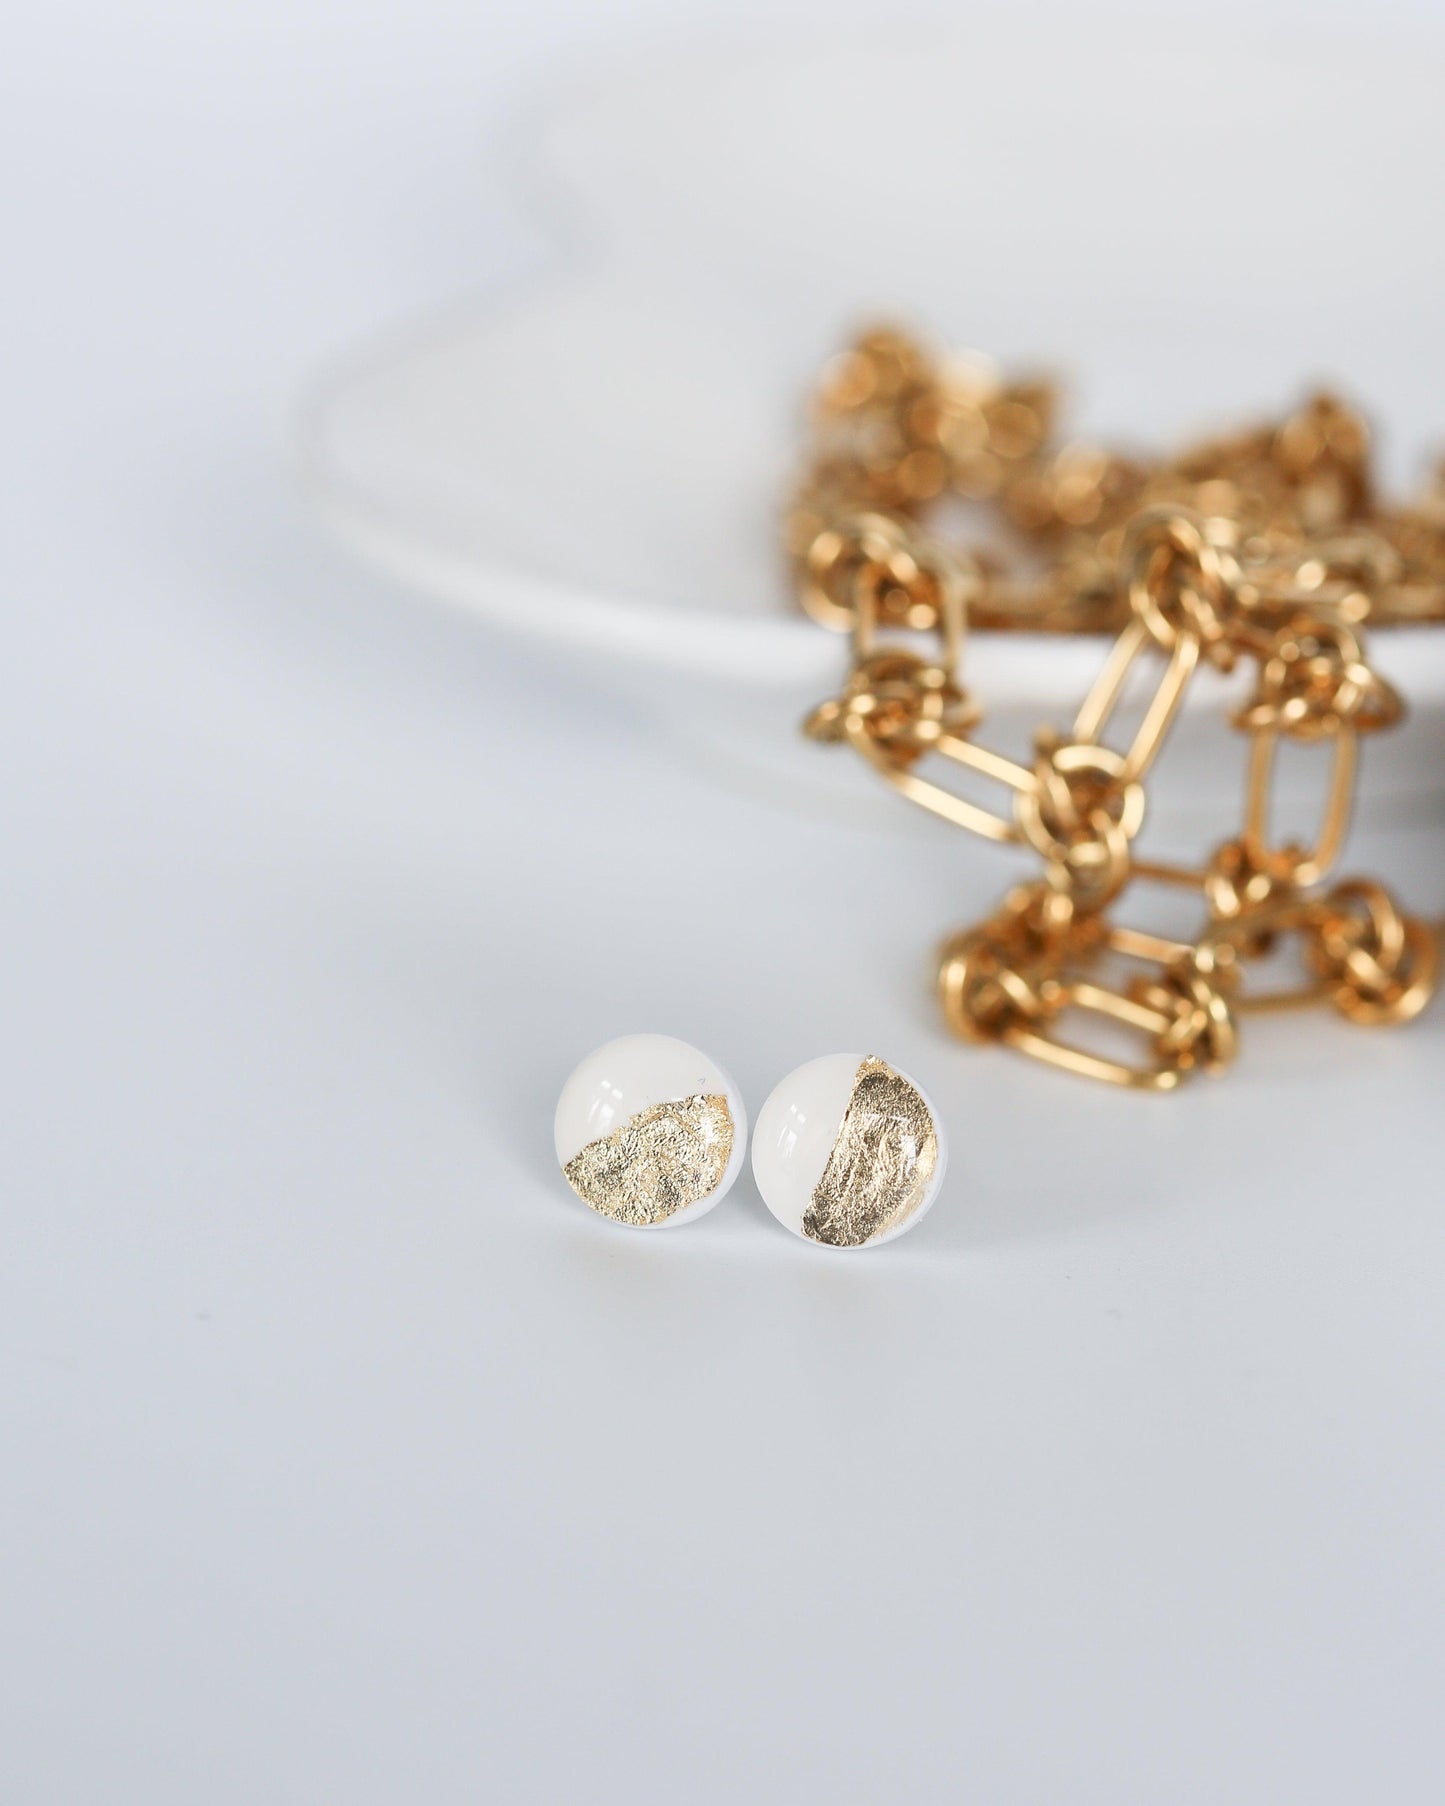 White gold foil studs bridesmaid earrings